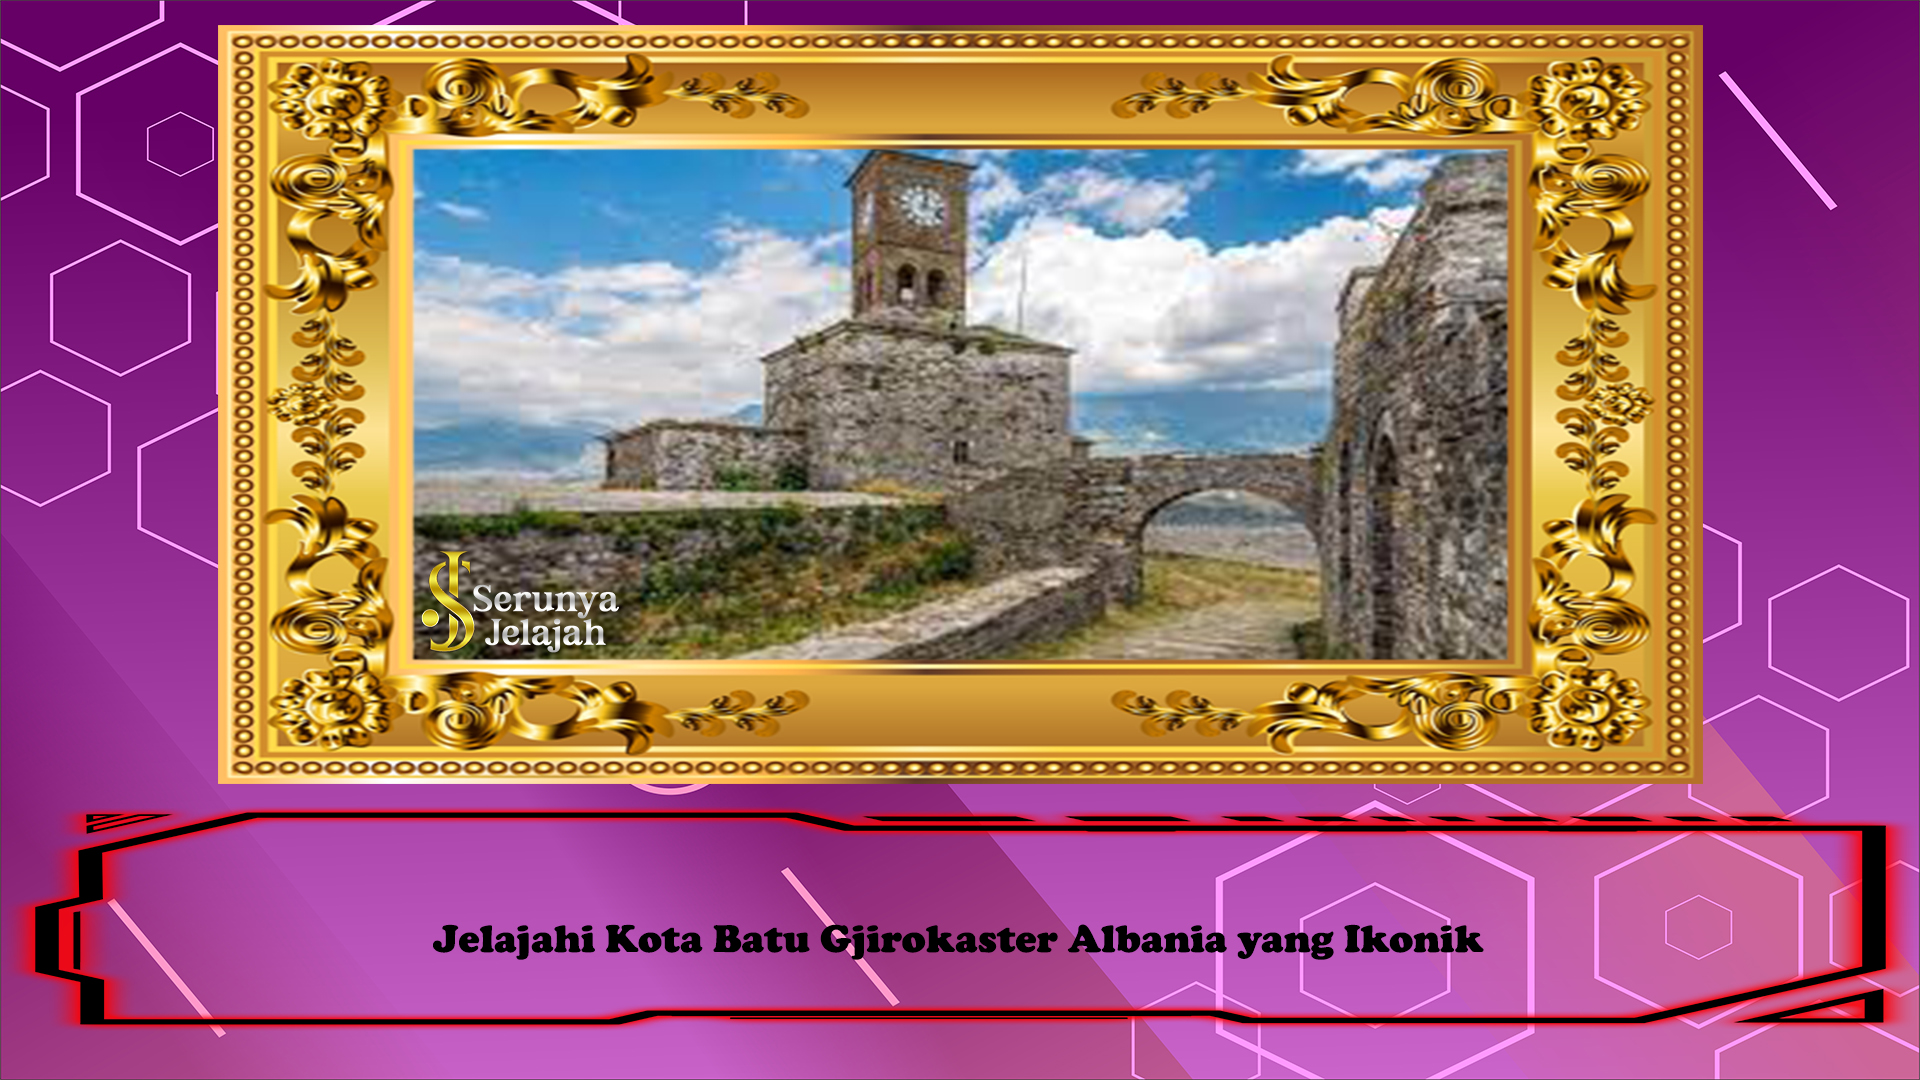 Jelajahi Kota Batu Gjirokaster Albania yang Ikonik